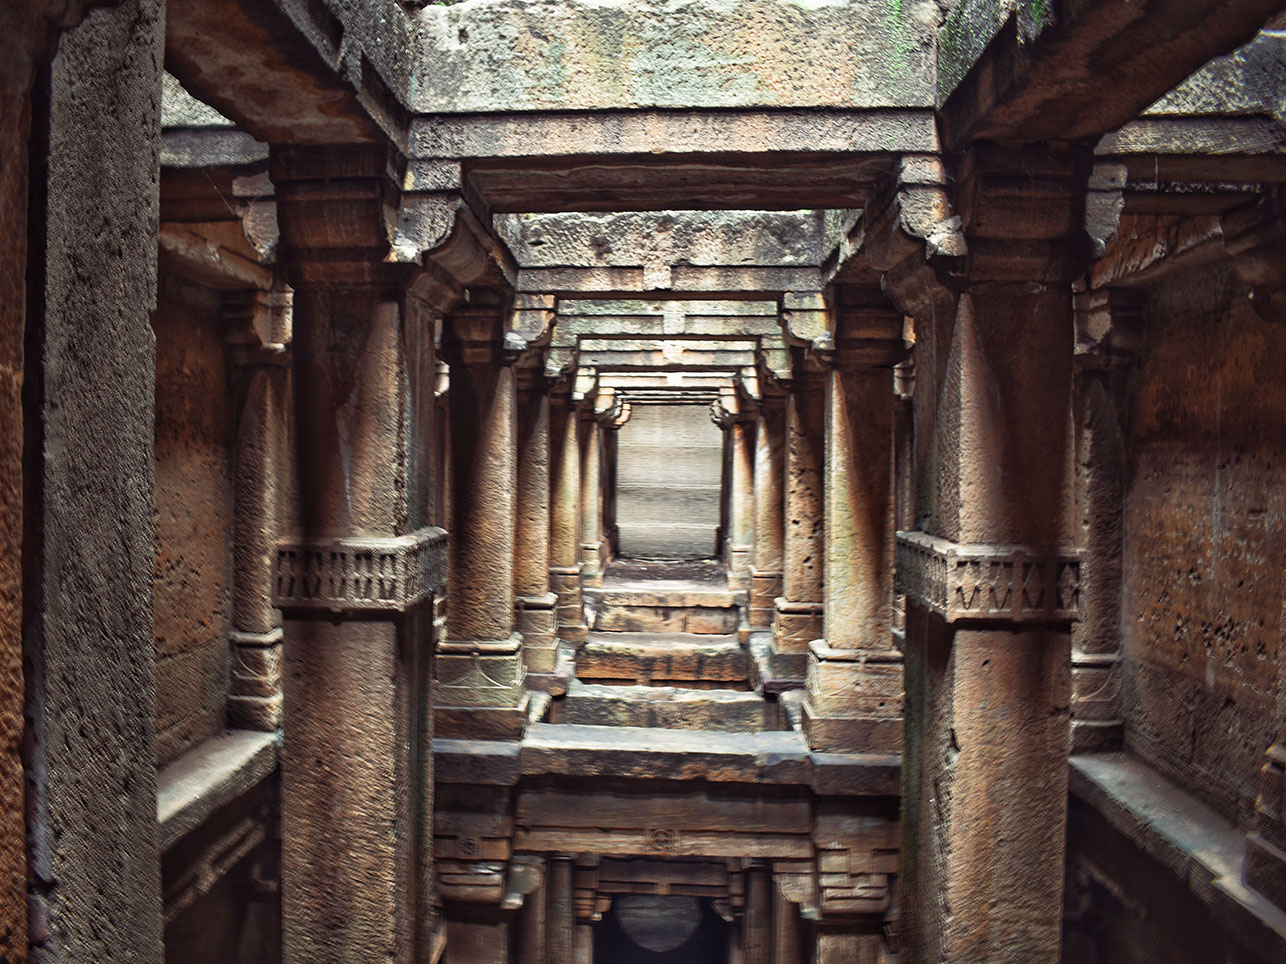 Entering Vidyadhar ni Vav stepwell in Vadodara was like entering a mysterious dungeon